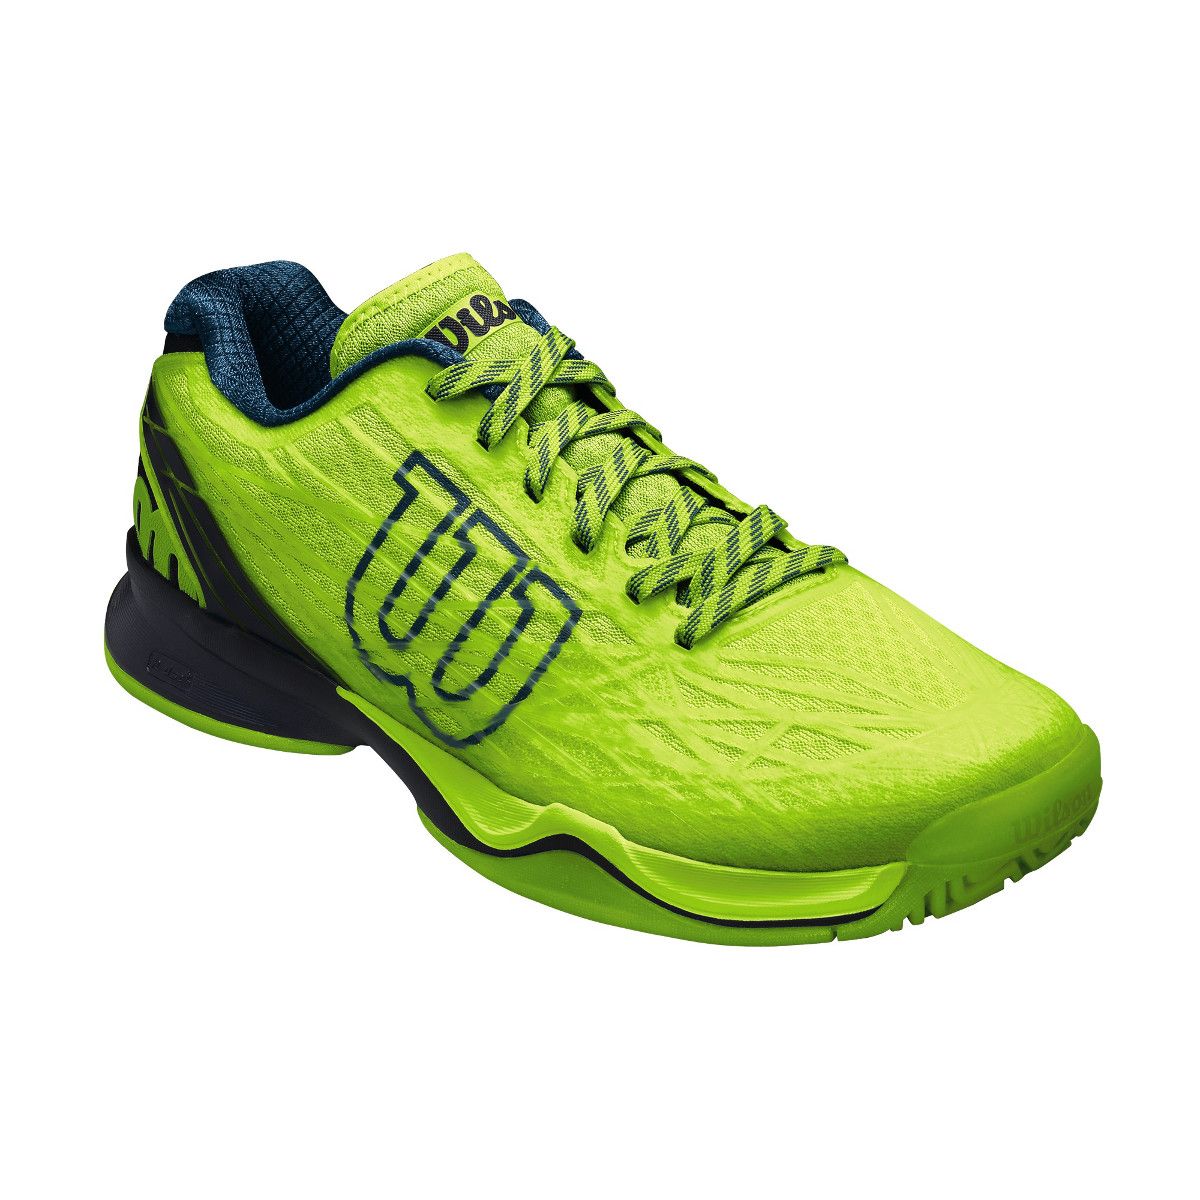 Wilson Kaos Men's Tennis Shoes WRS322400